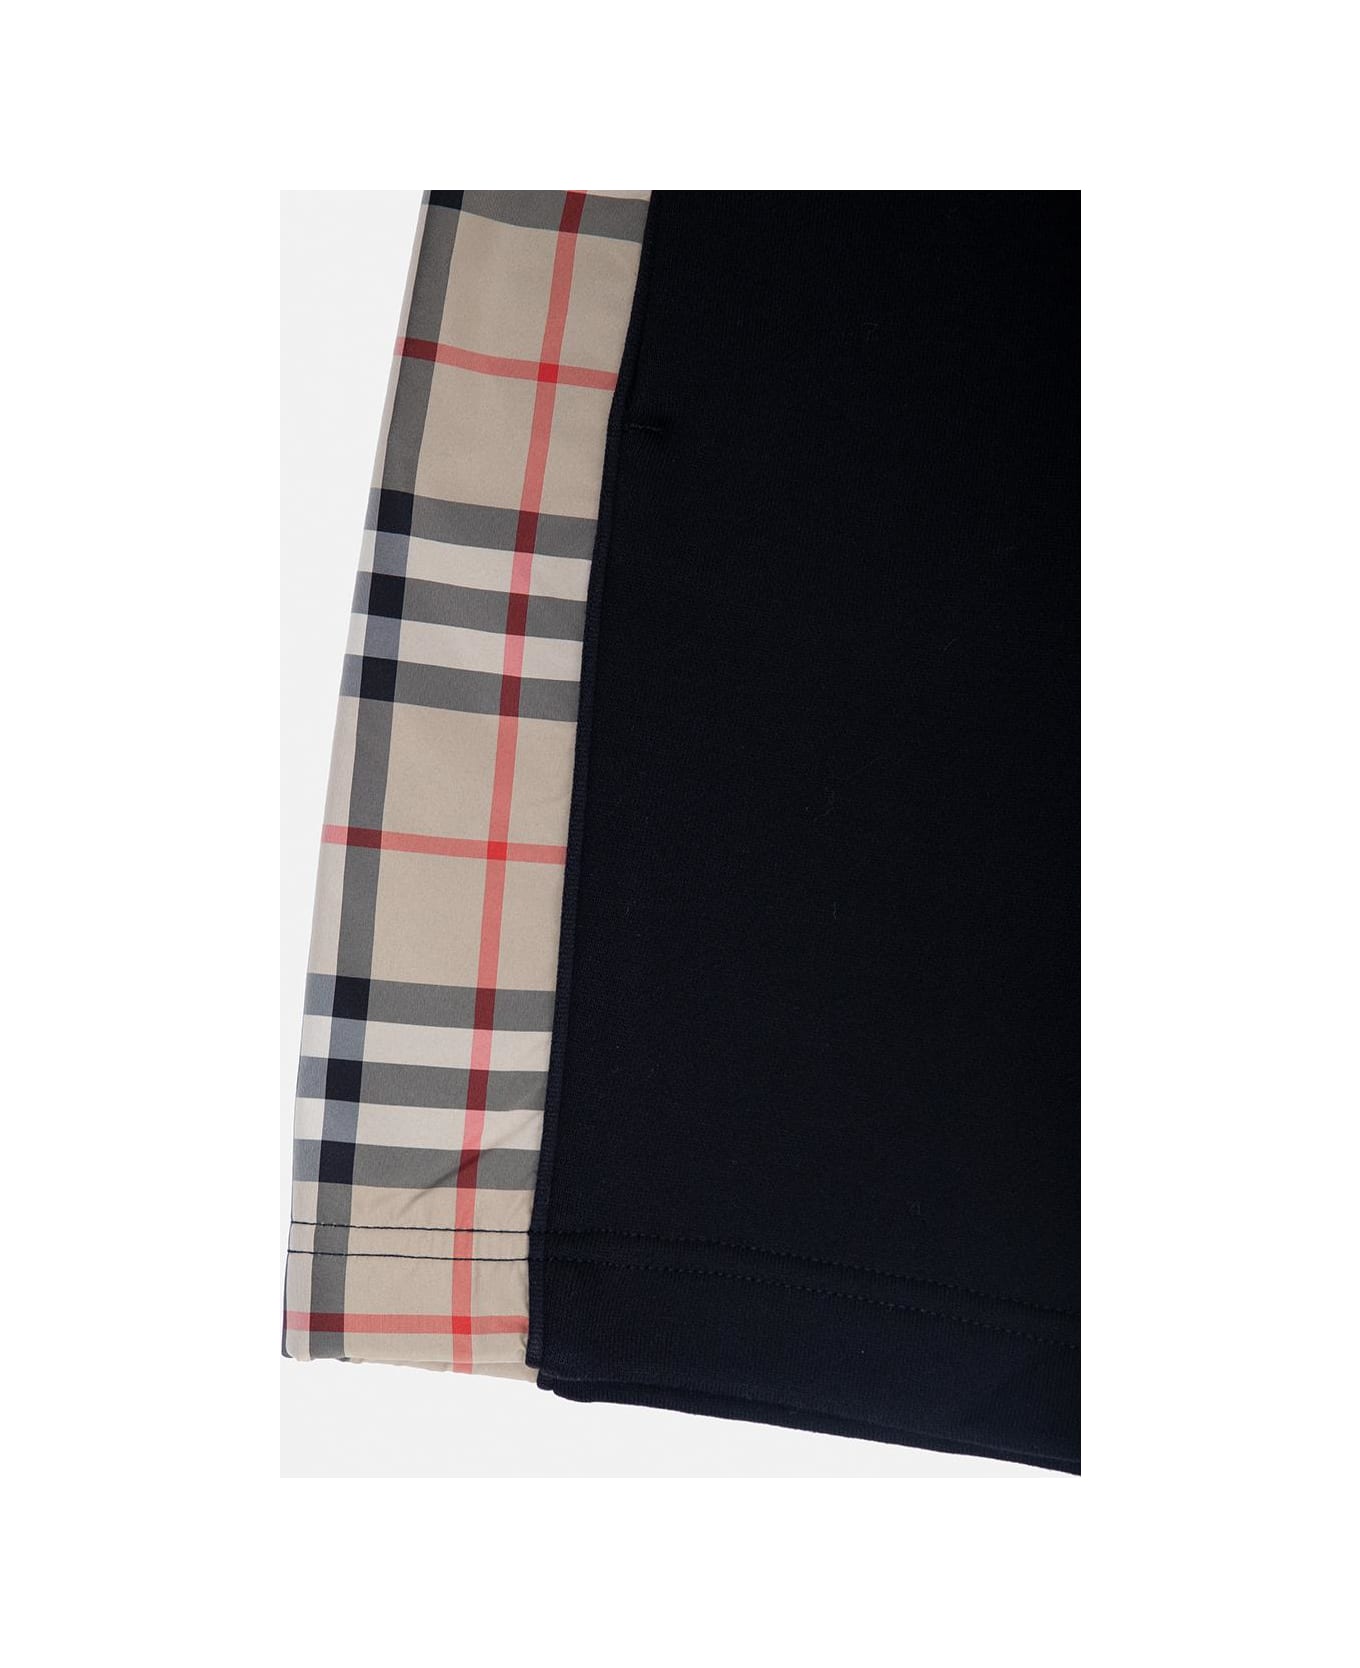 Burberry 'nolen' Patterned Shorts - Black